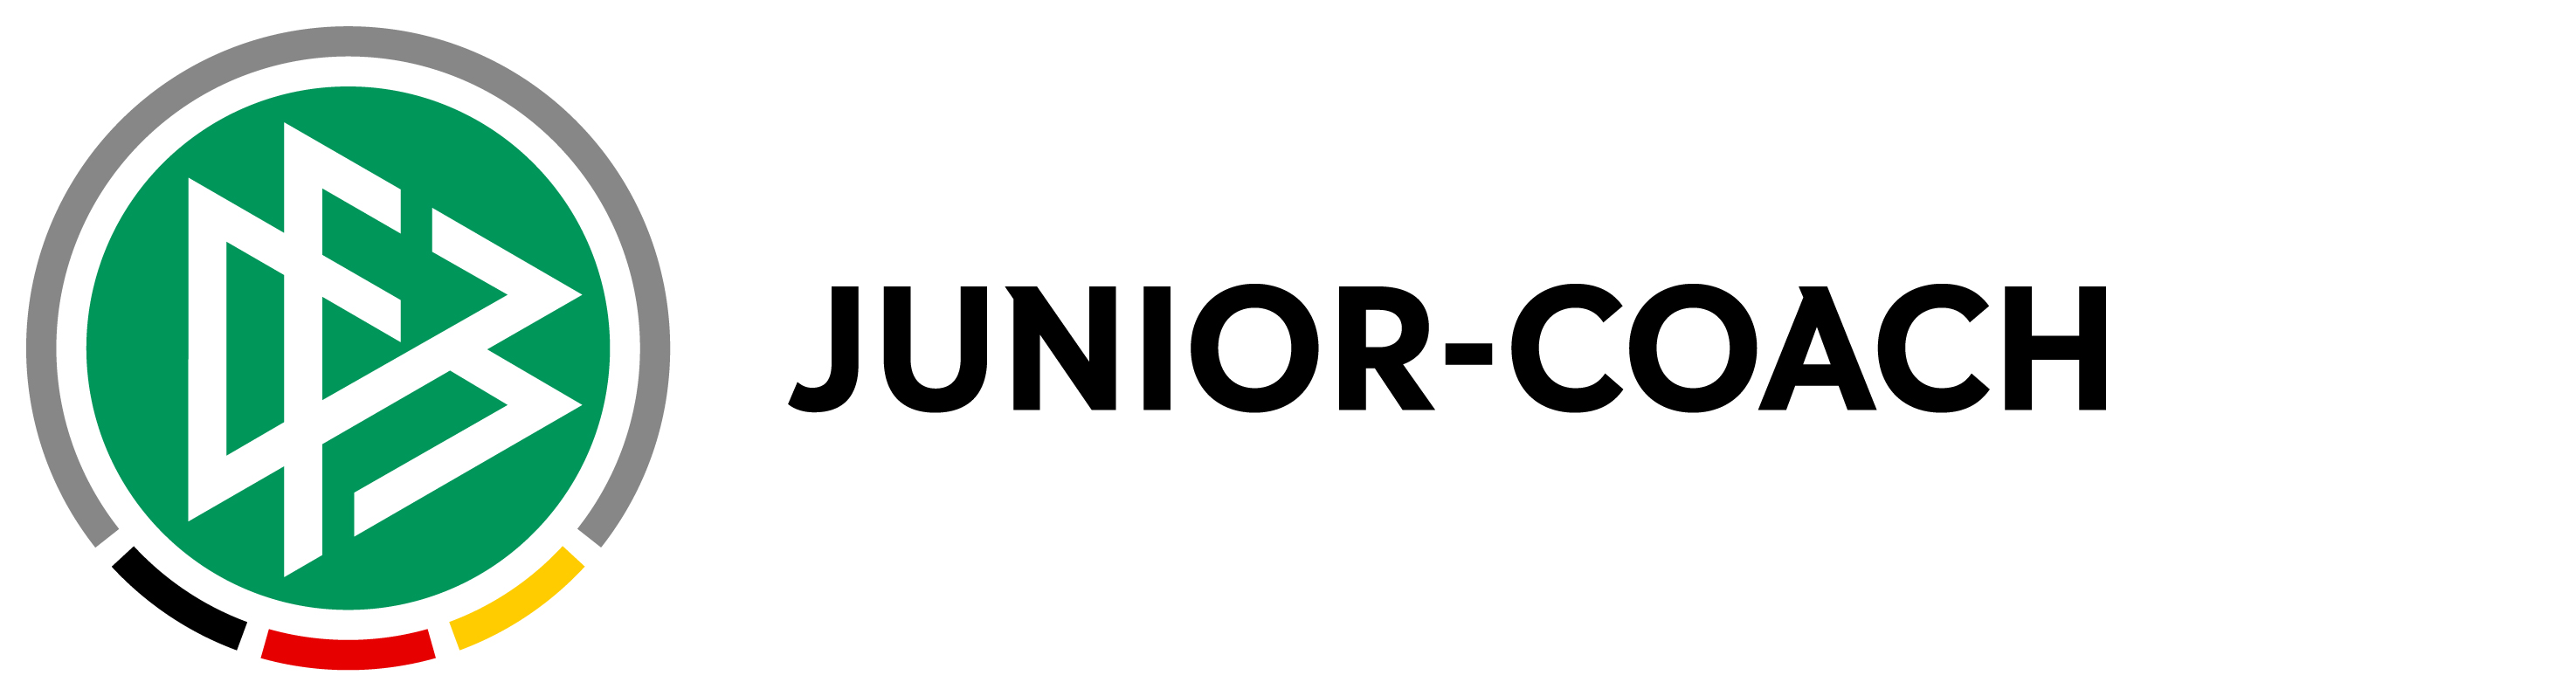 DFB JUNIOR COACH Logo rechts RGB positiv